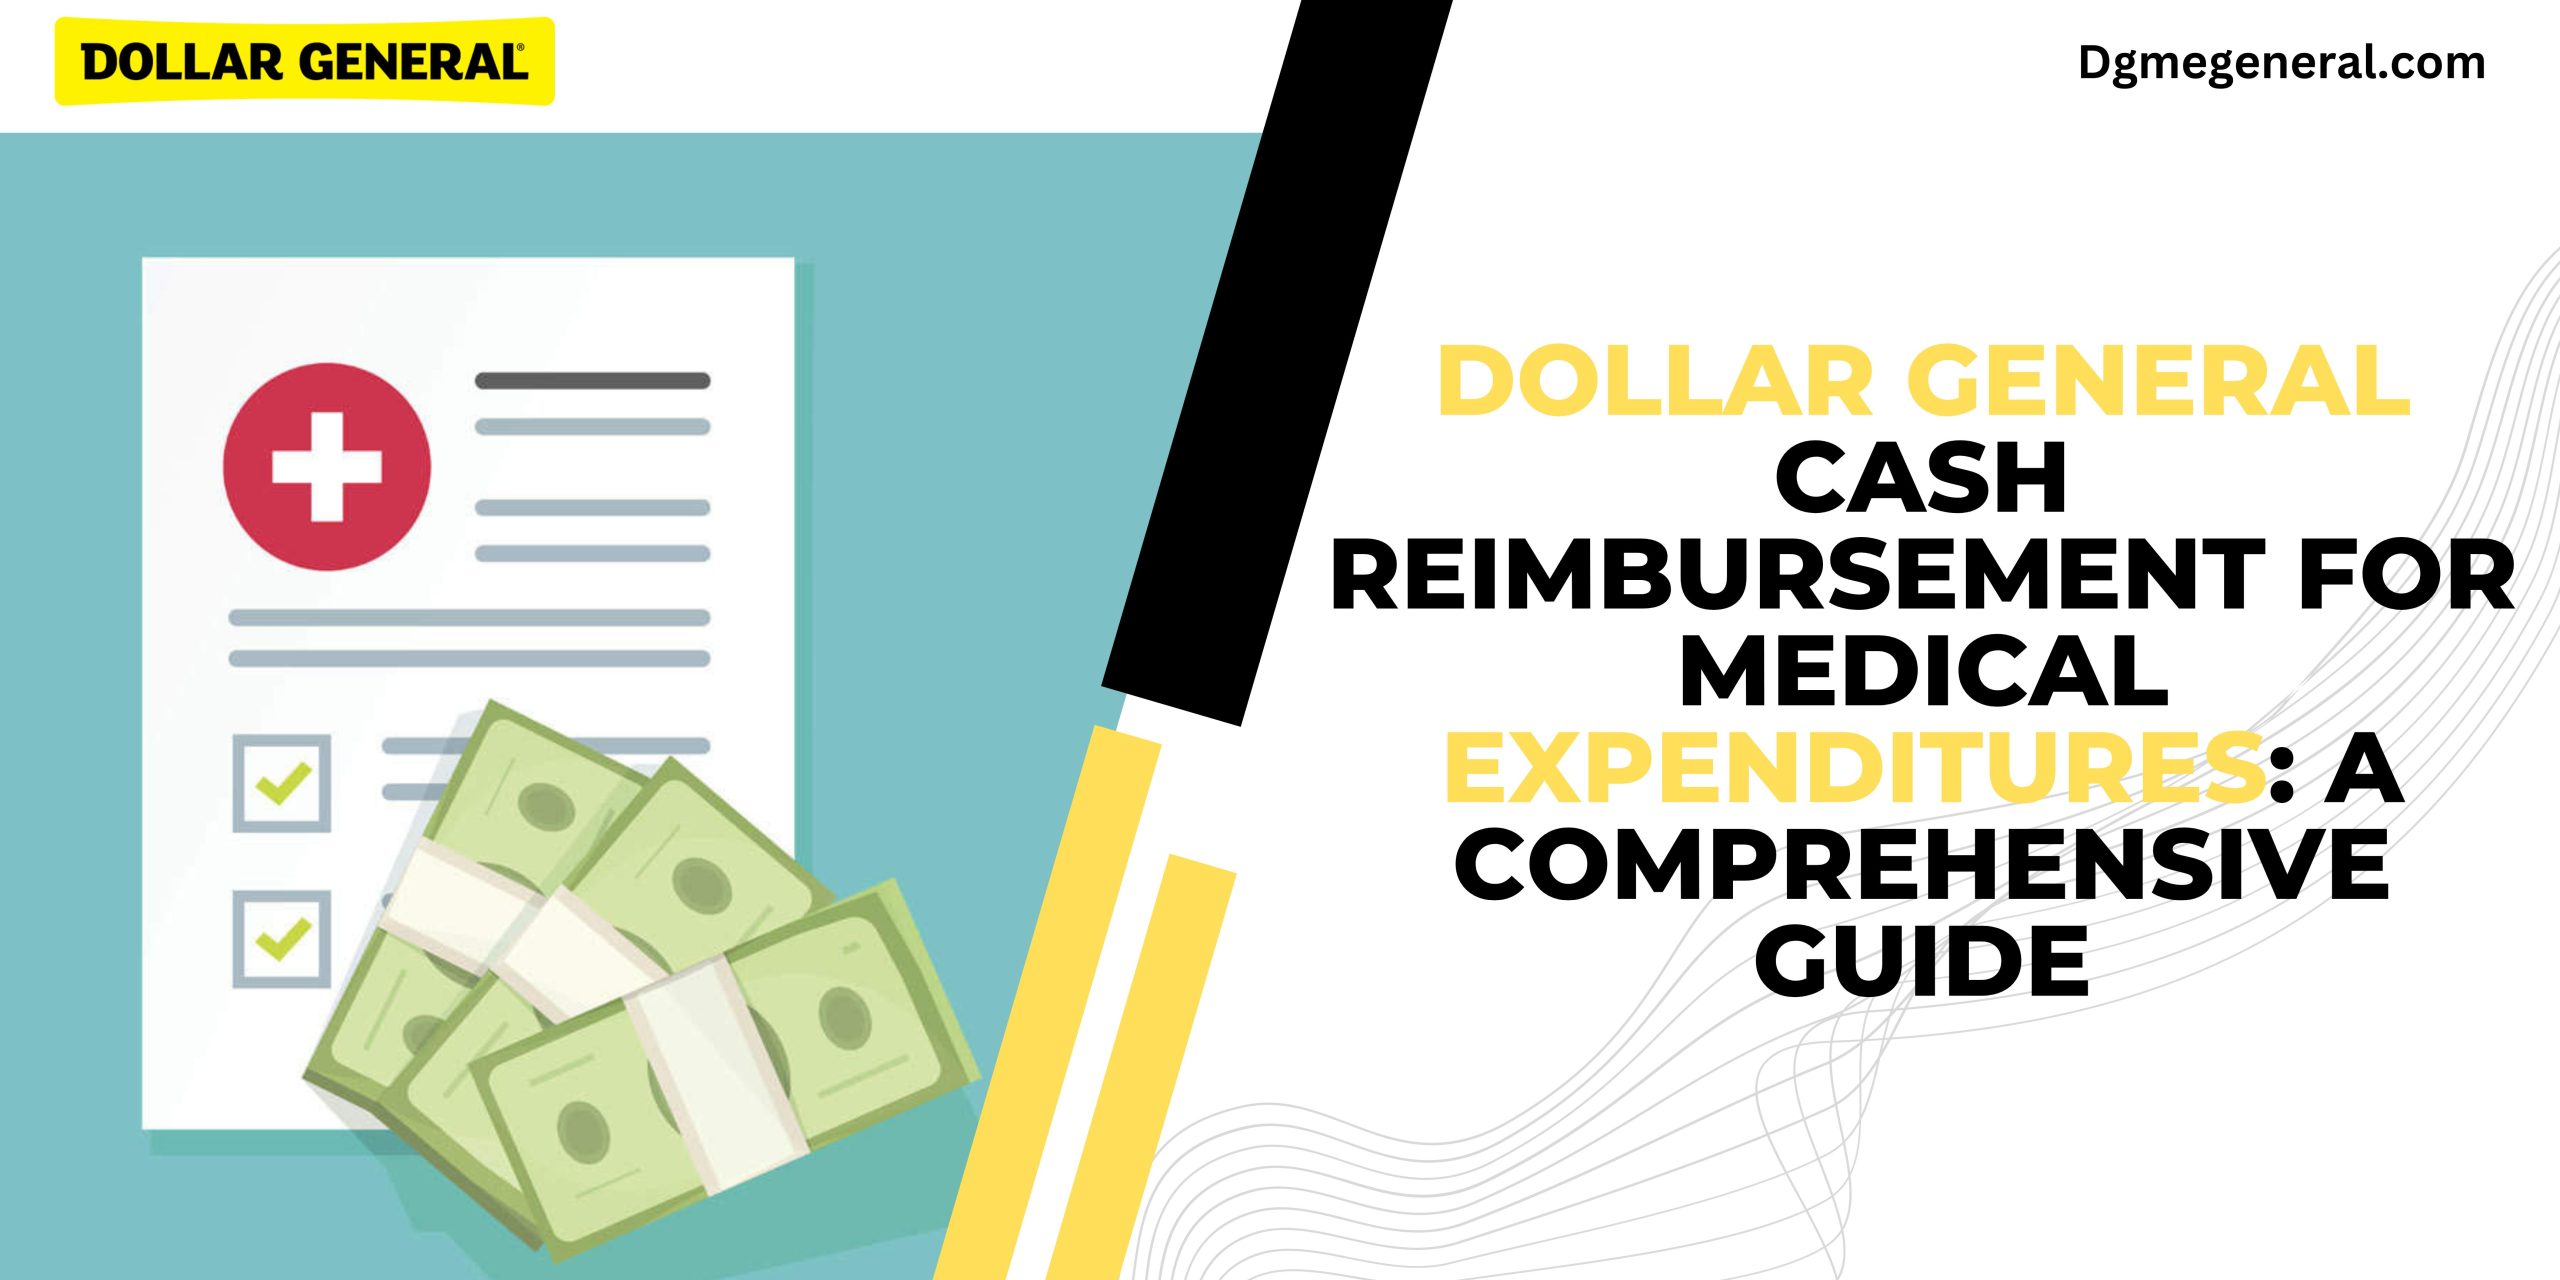 Dollar General Cash Reimbursement for Medical Expenditures A Comprehensive Guide